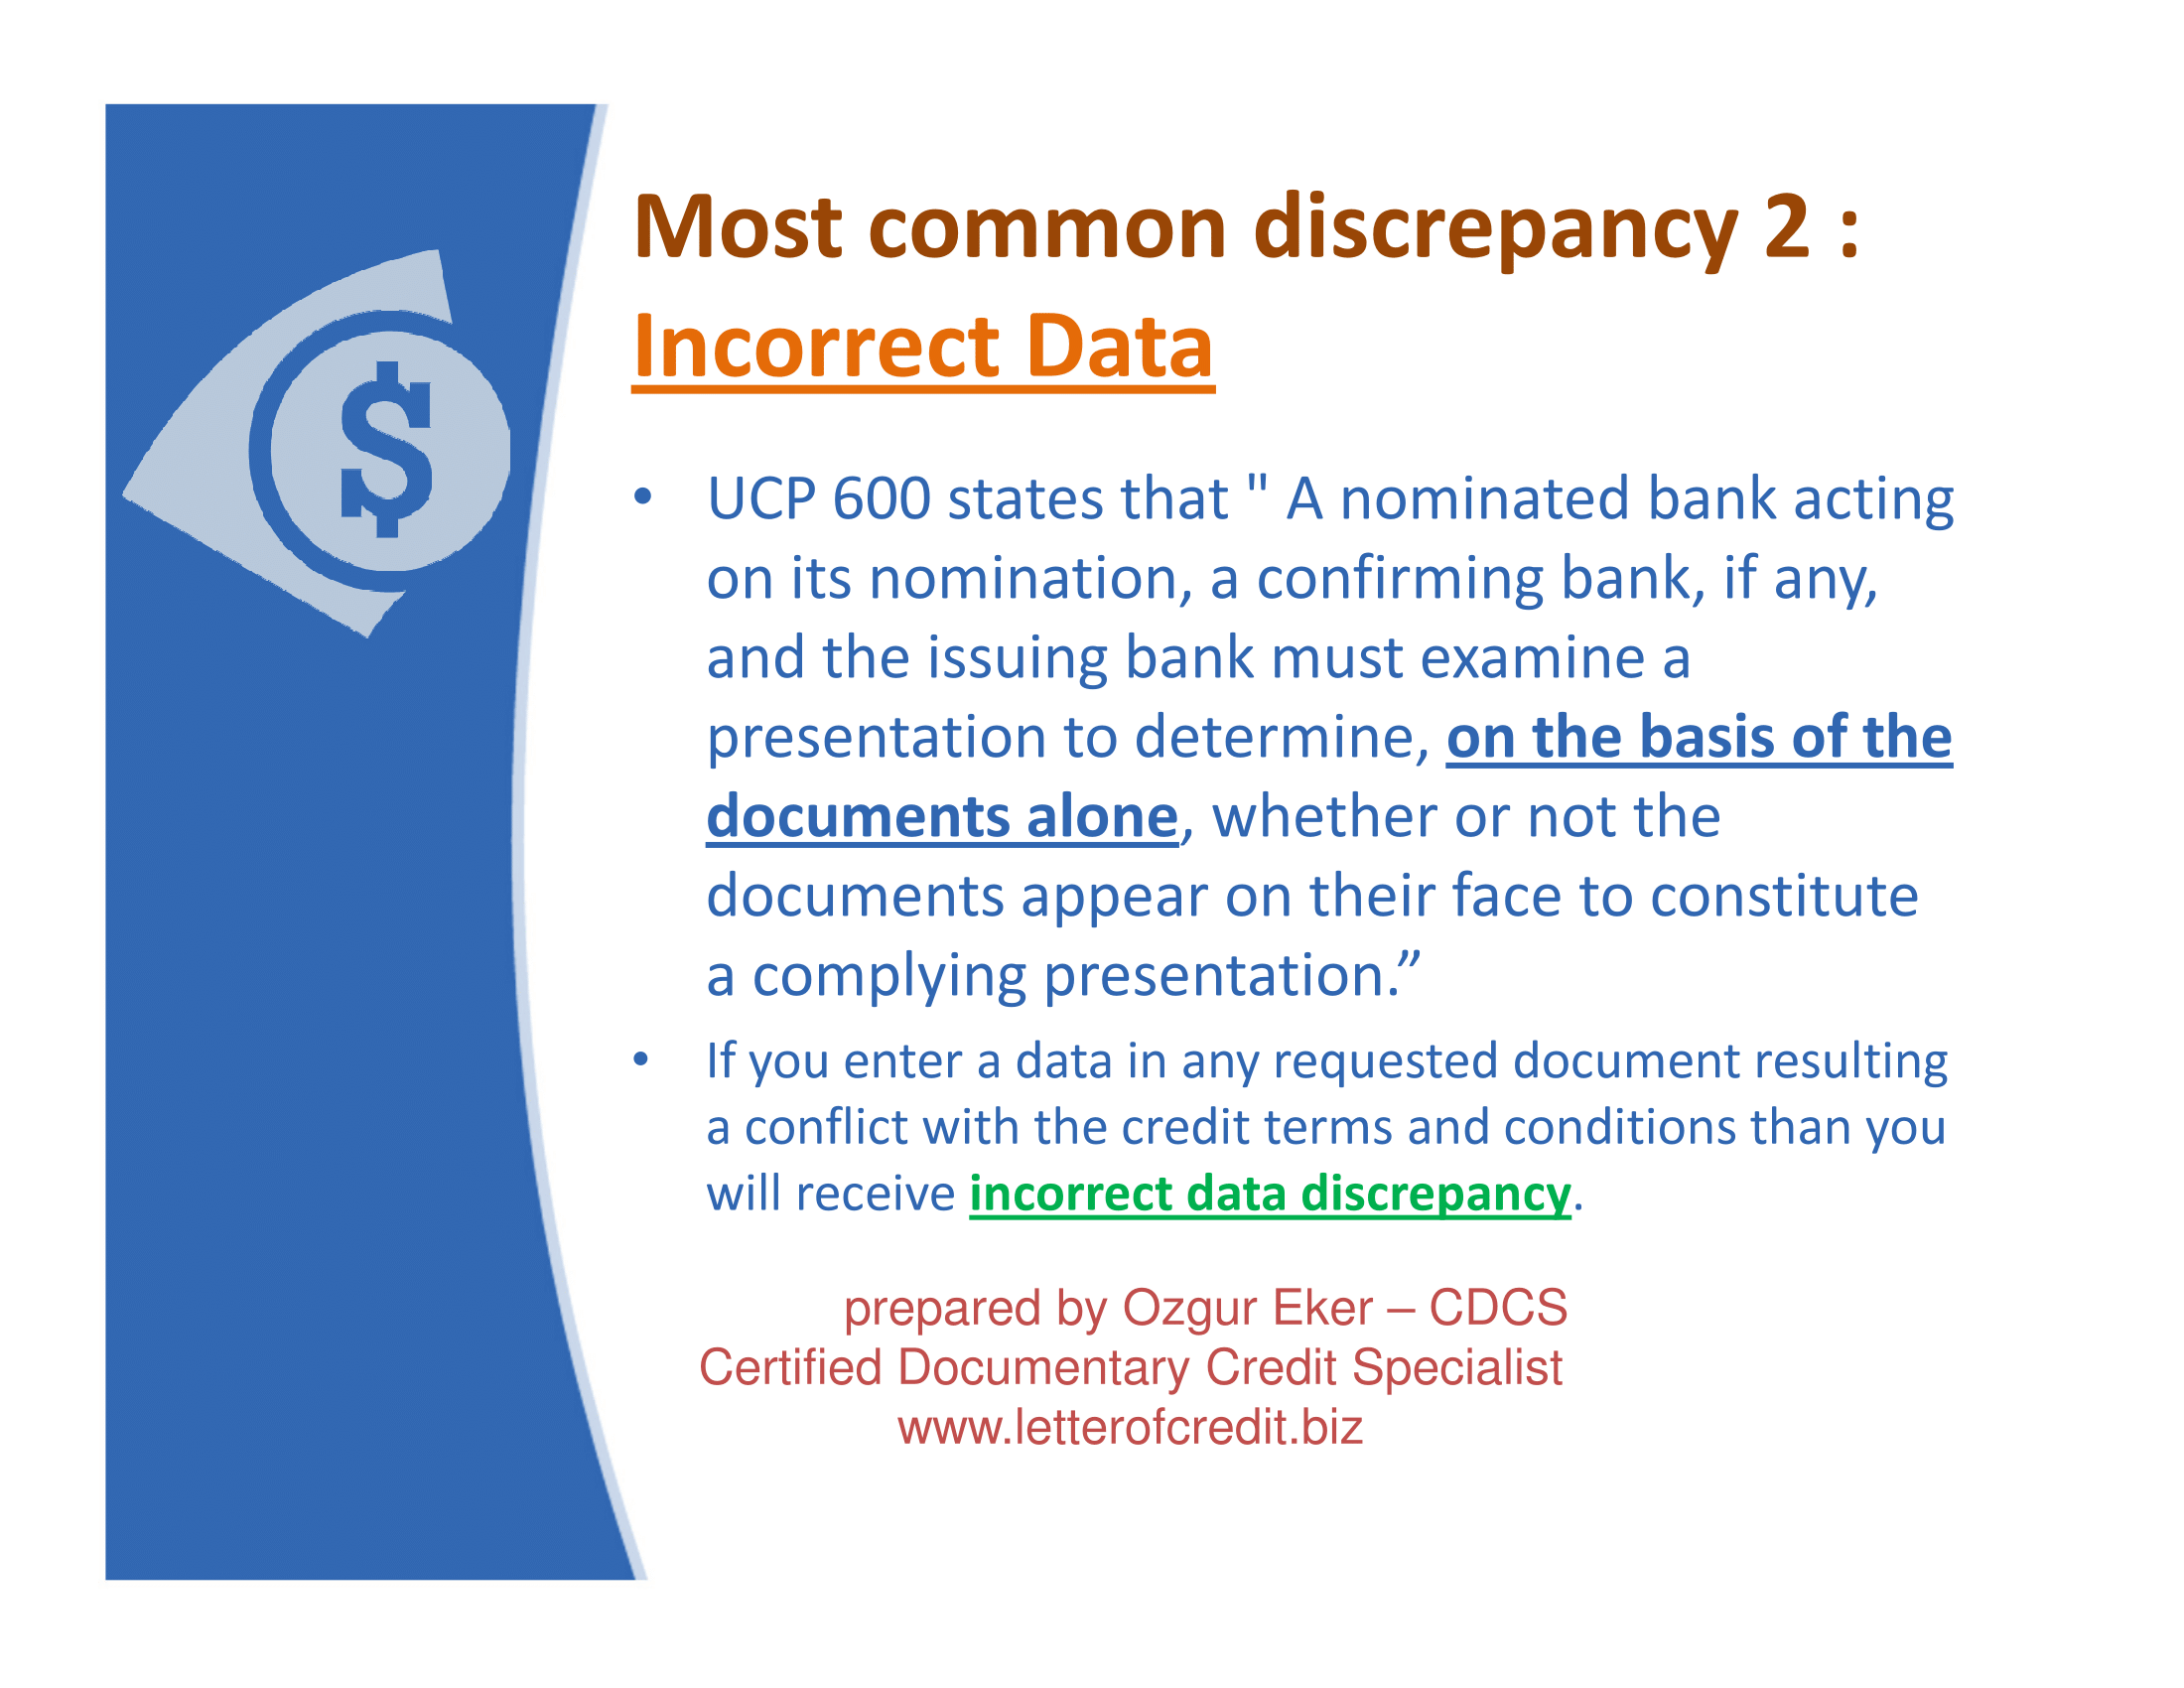  incorrect data discrepancy